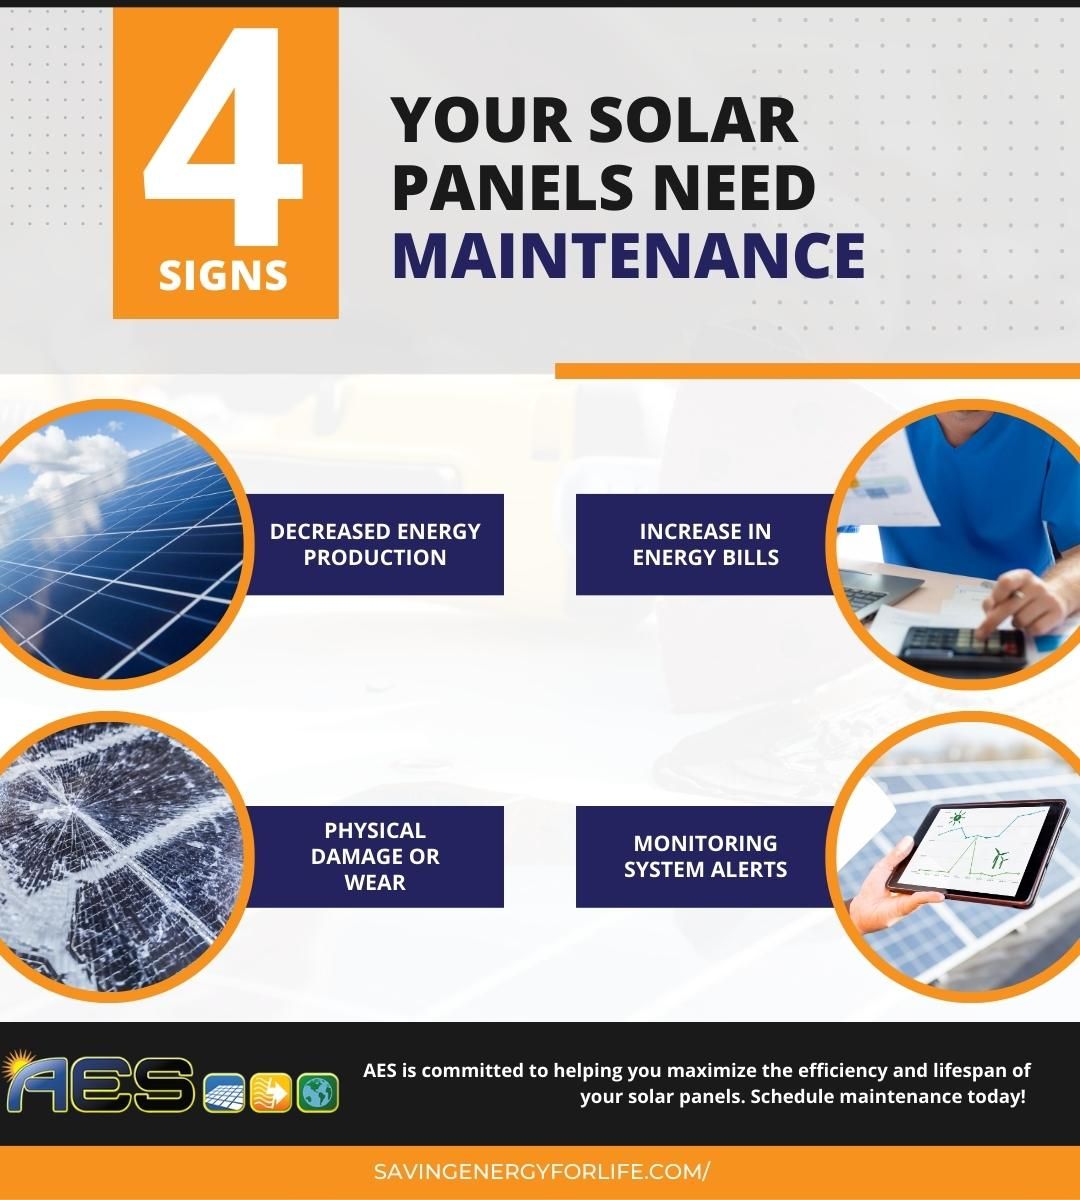 M32841 - Alternative Energy Systems - Signs Your Solar Panels Need Maintenance .jpg